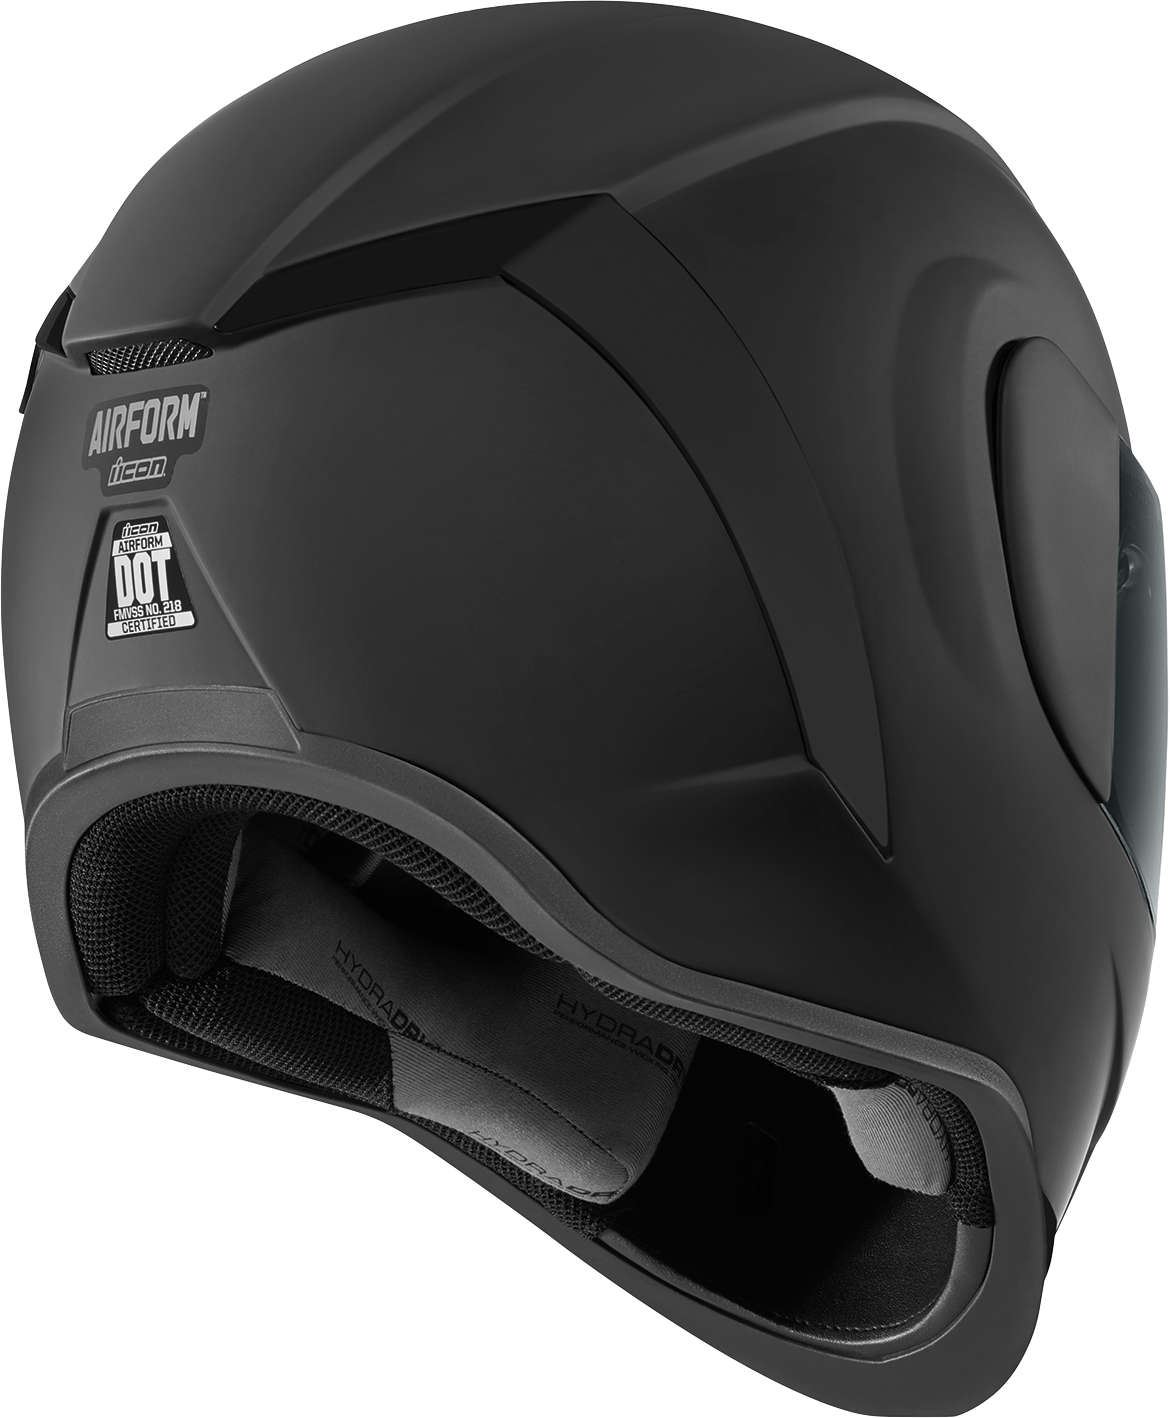 ICON Airform™ Helmet - Dark - Rubatone - XL 0101-15453